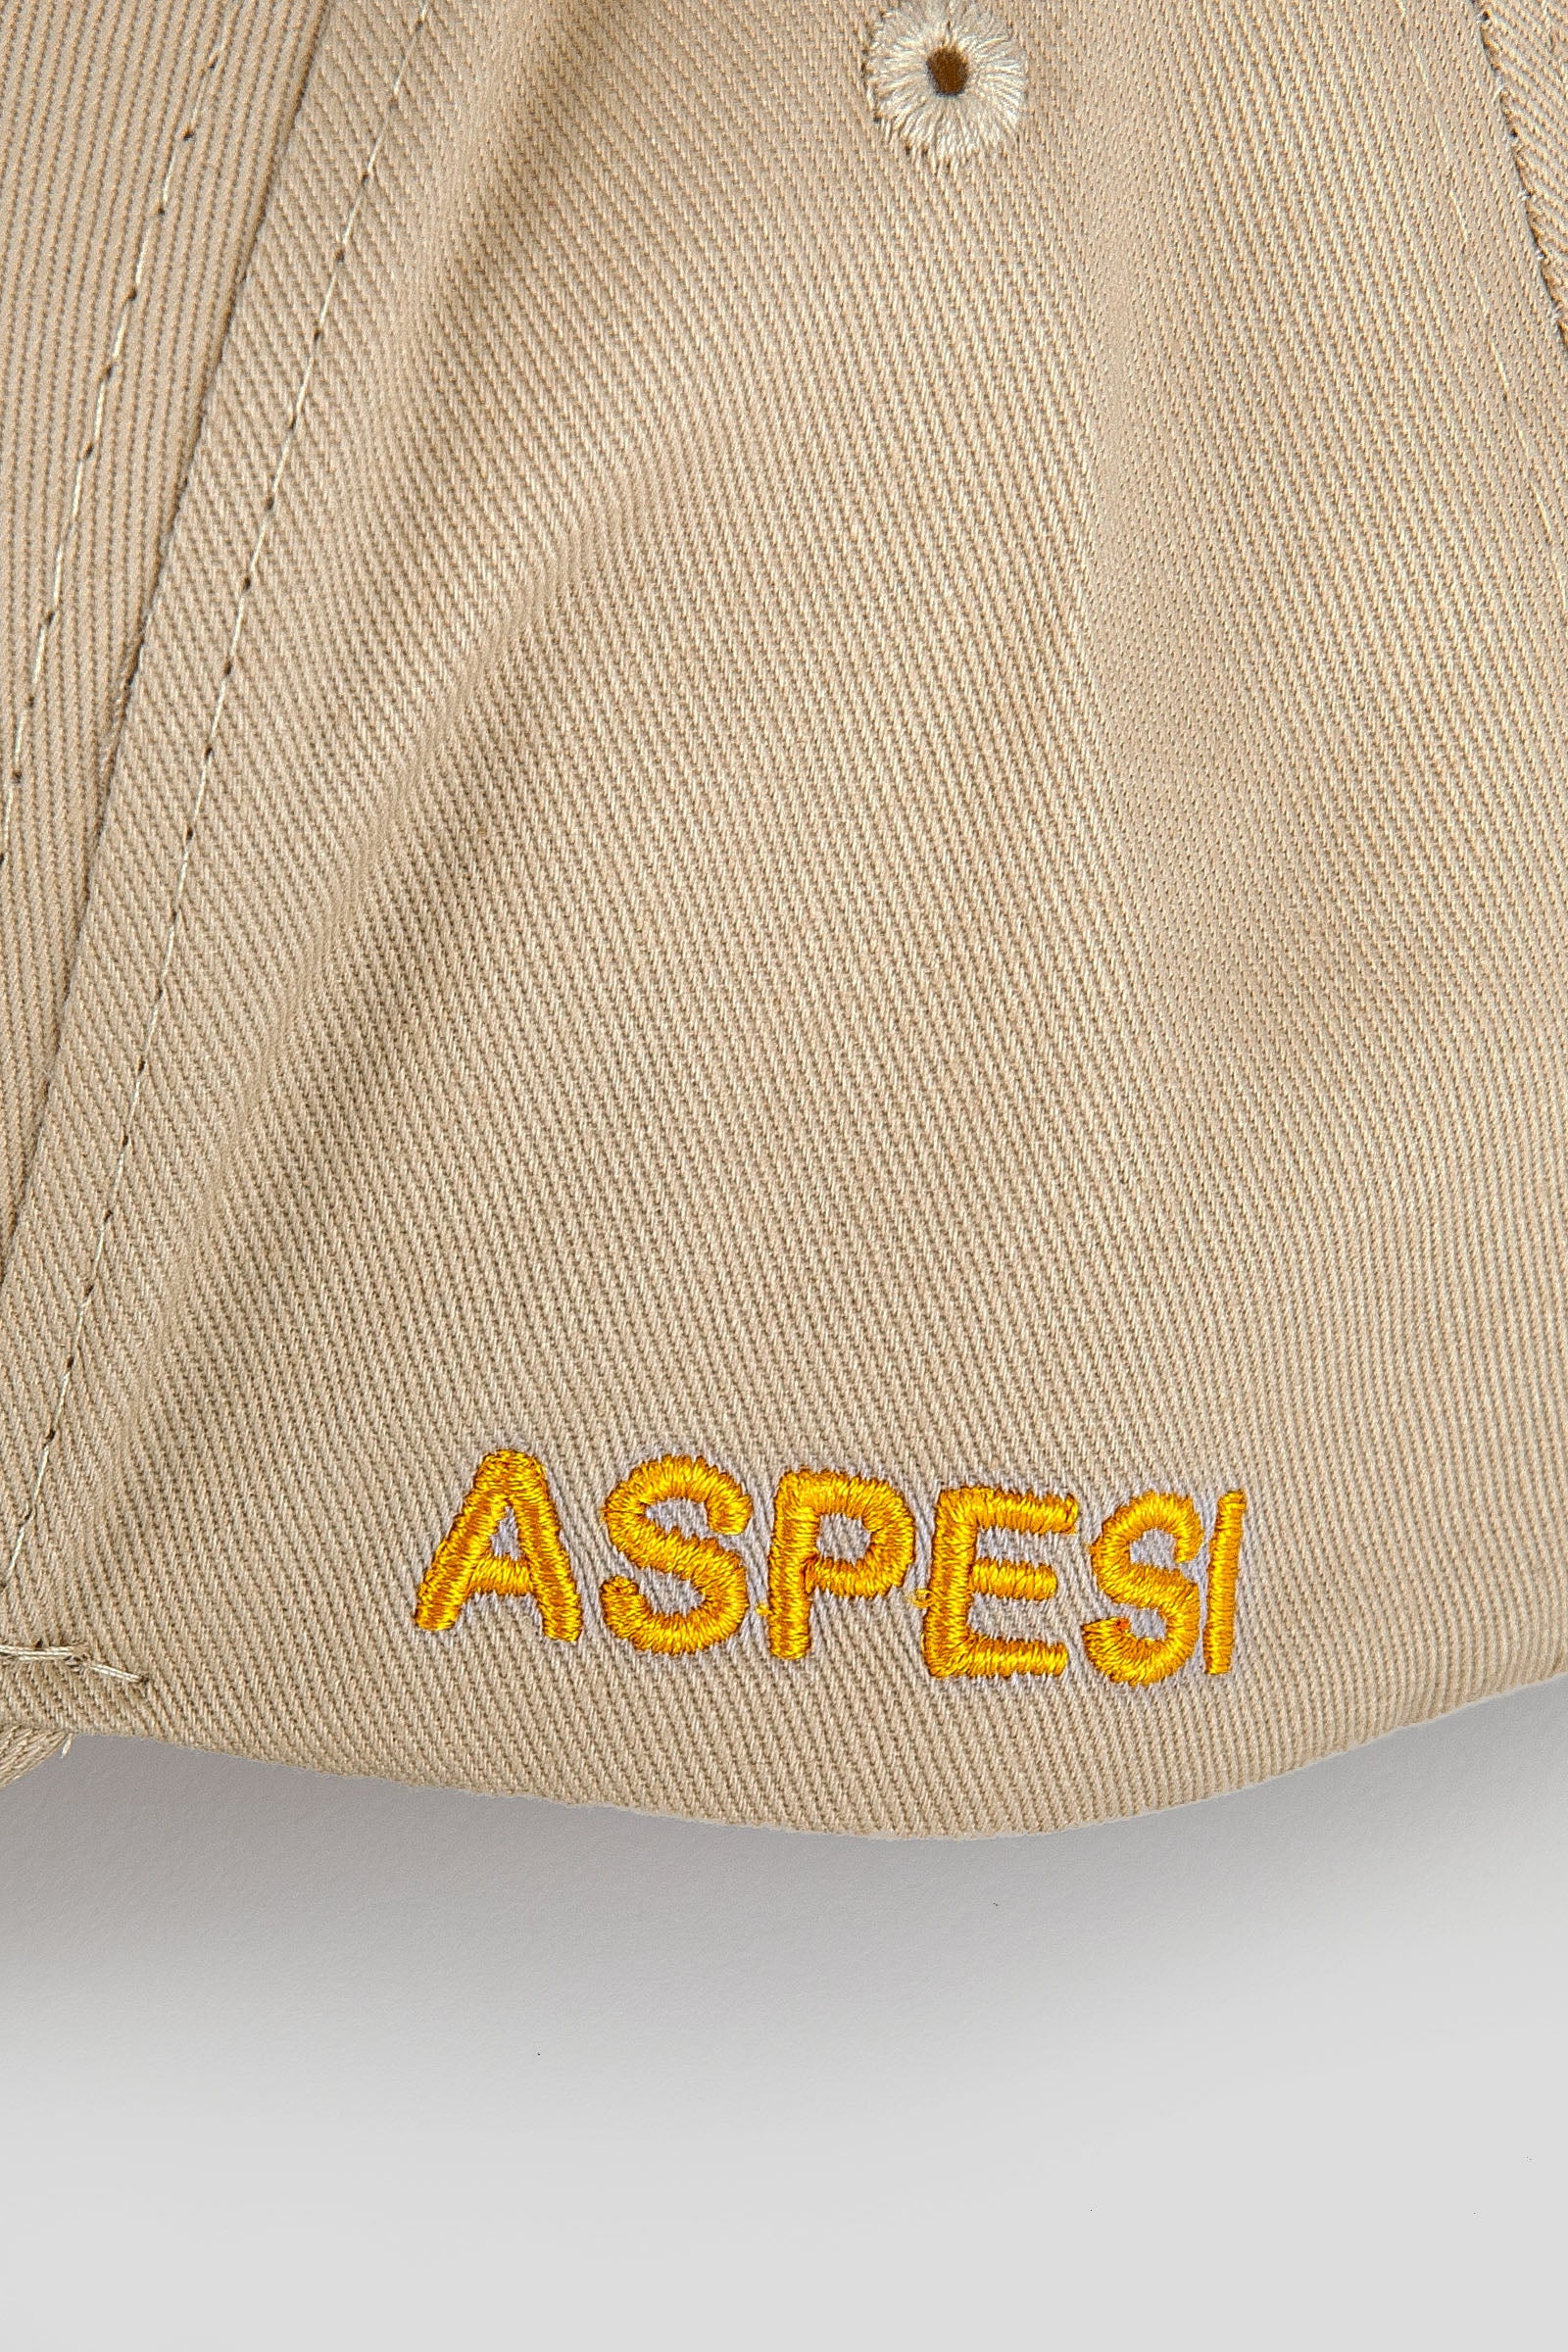 Aspesi Cotton Hat in Sand 2C01-P12801047 - 3